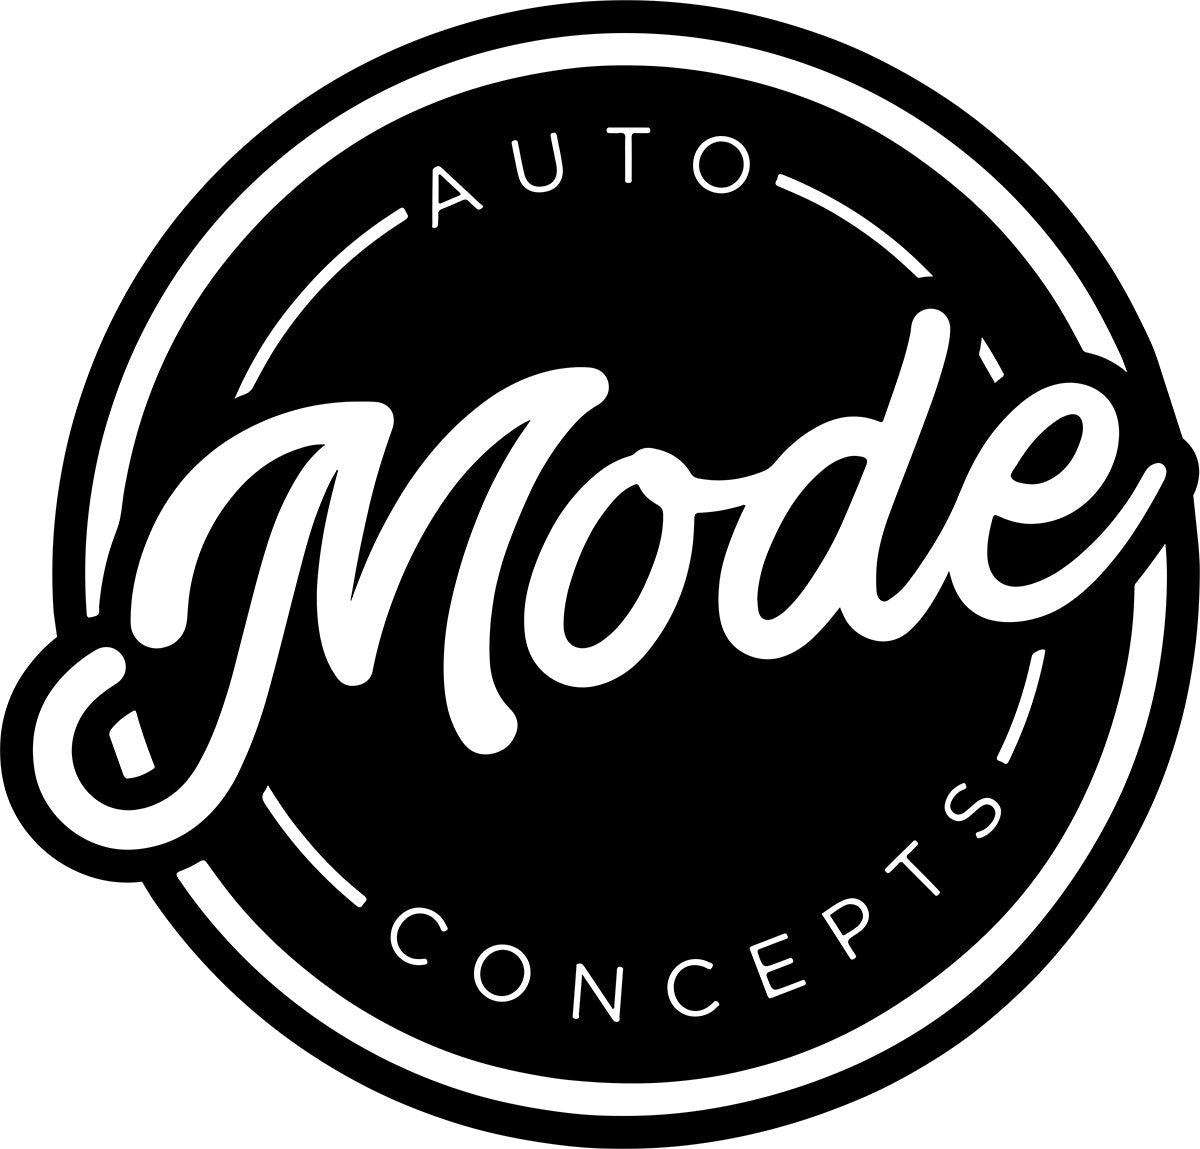 MODE Auto Concepts Sticker Round - Medium 100mm - MODE Auto Concepts